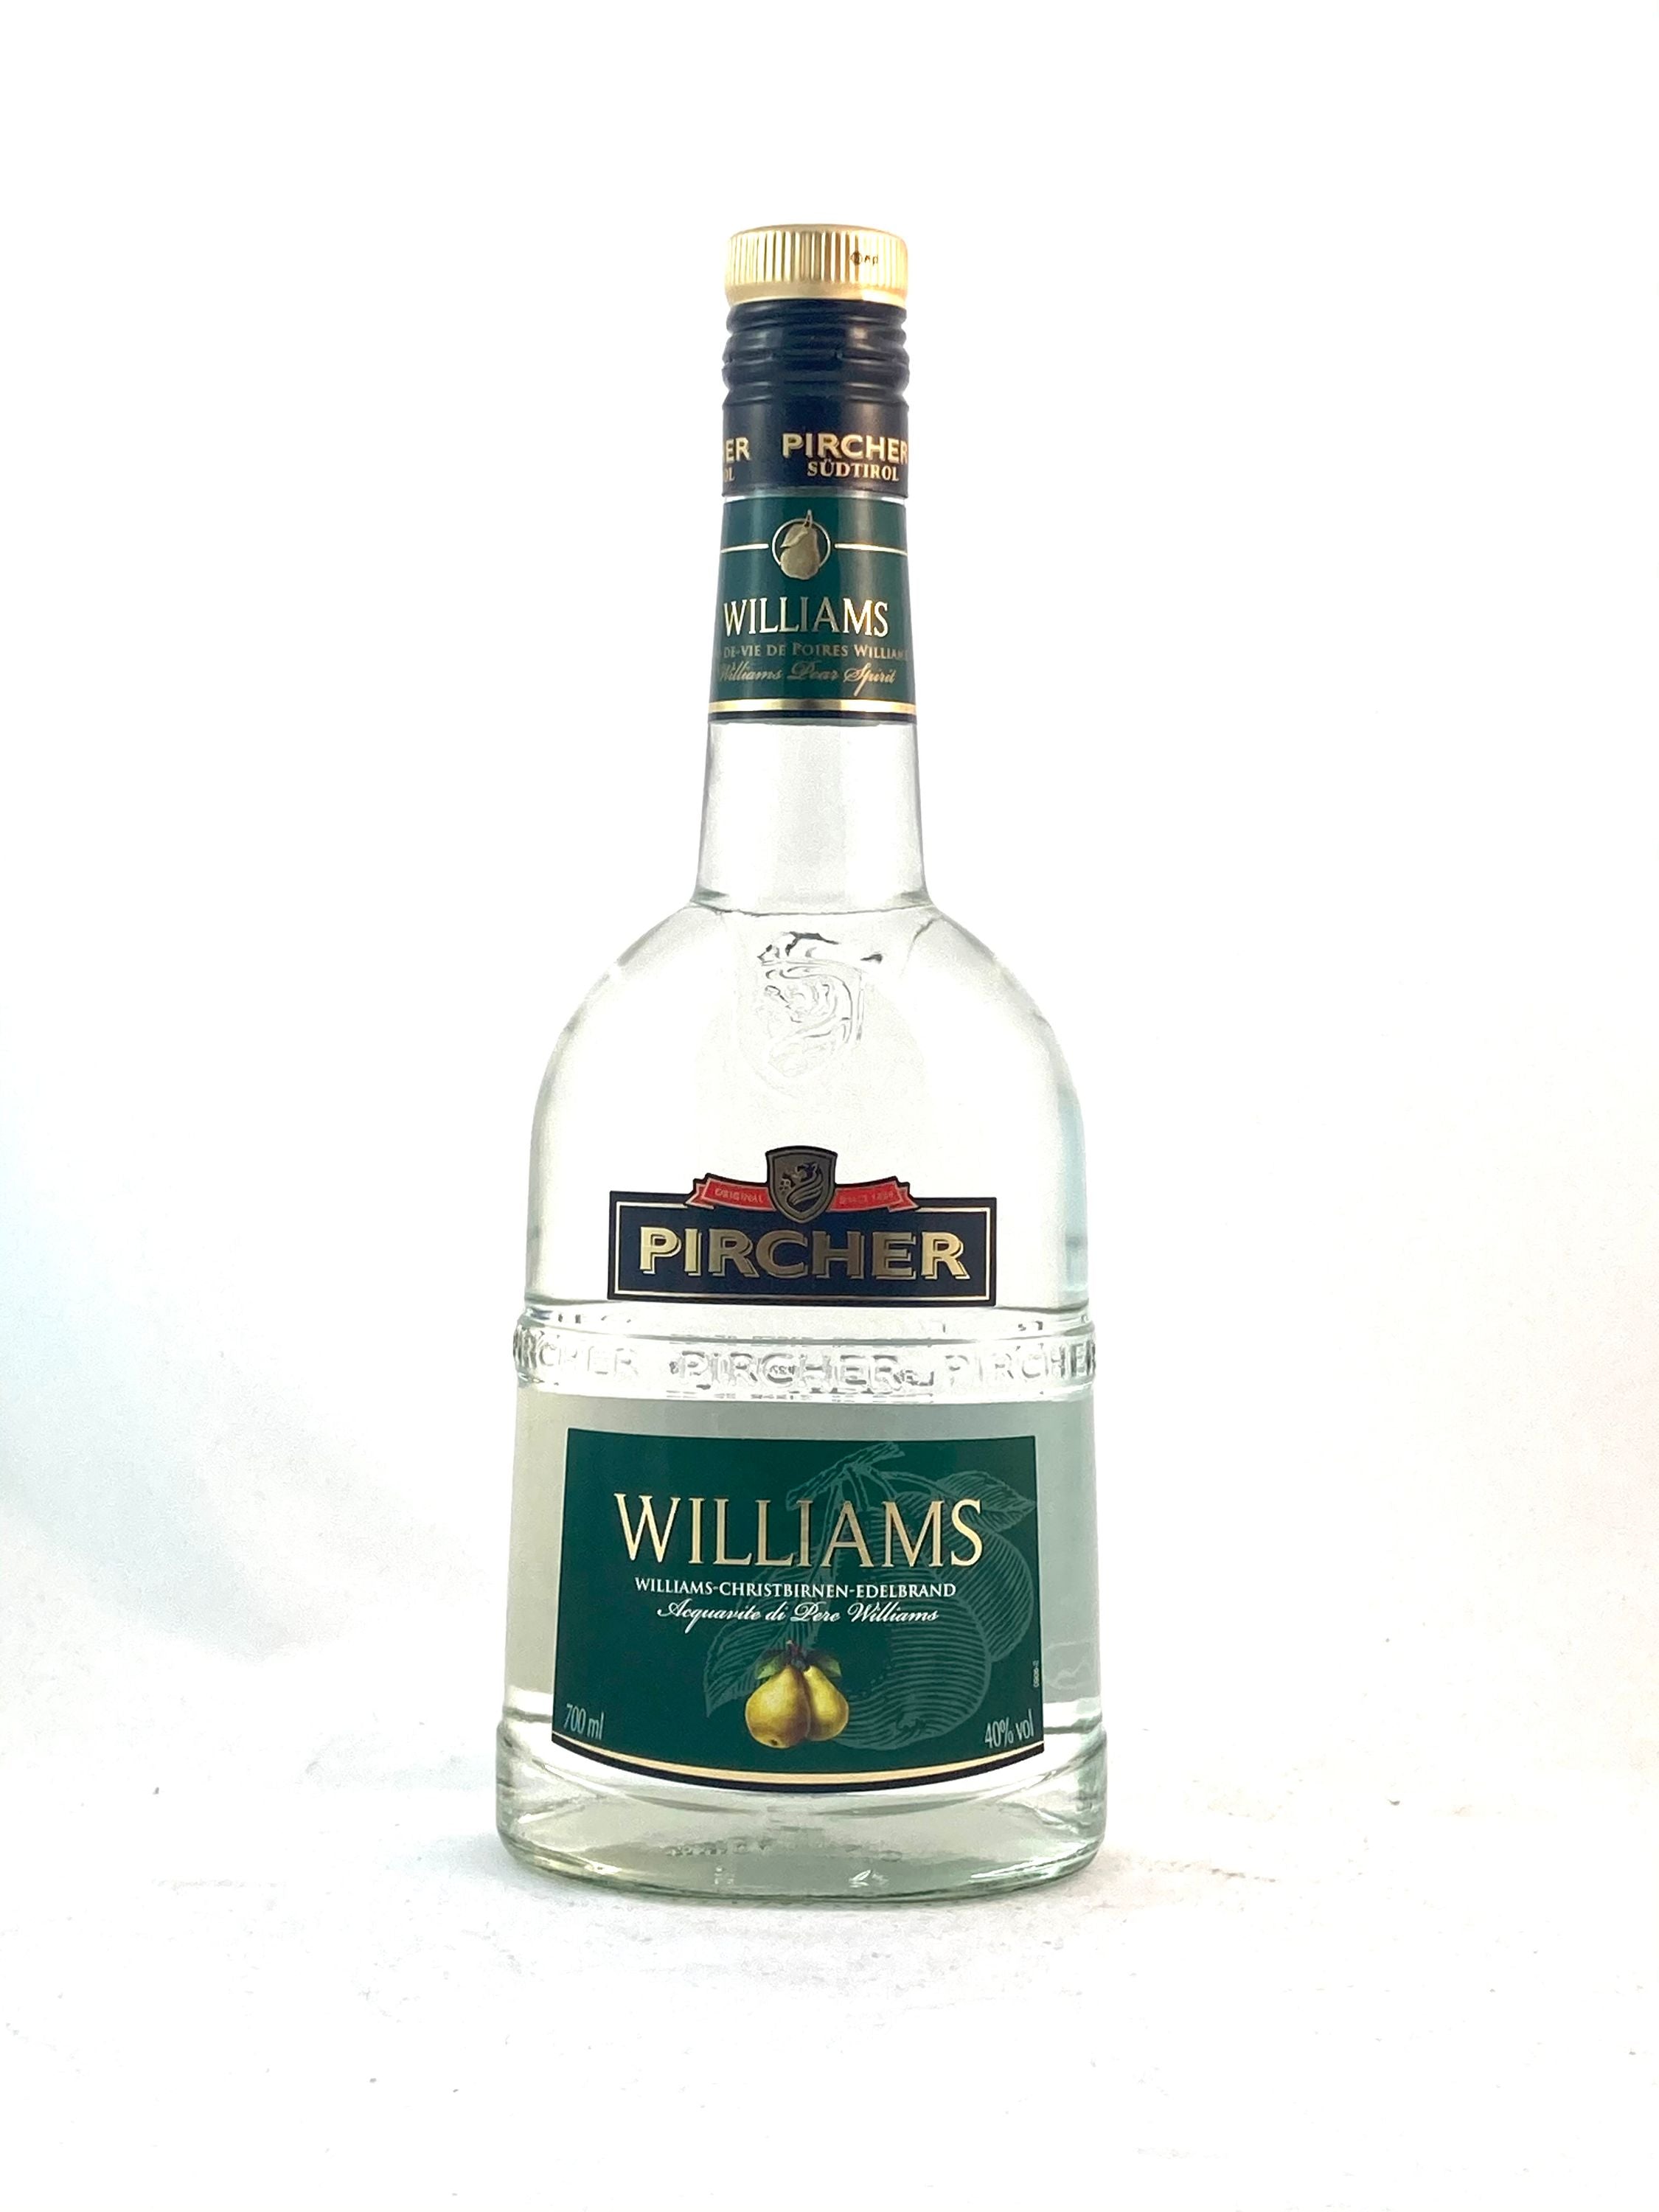 Pircher Williams 0,7l, alk. 40 tilavuusprosenttia, italialainen hieno brandy